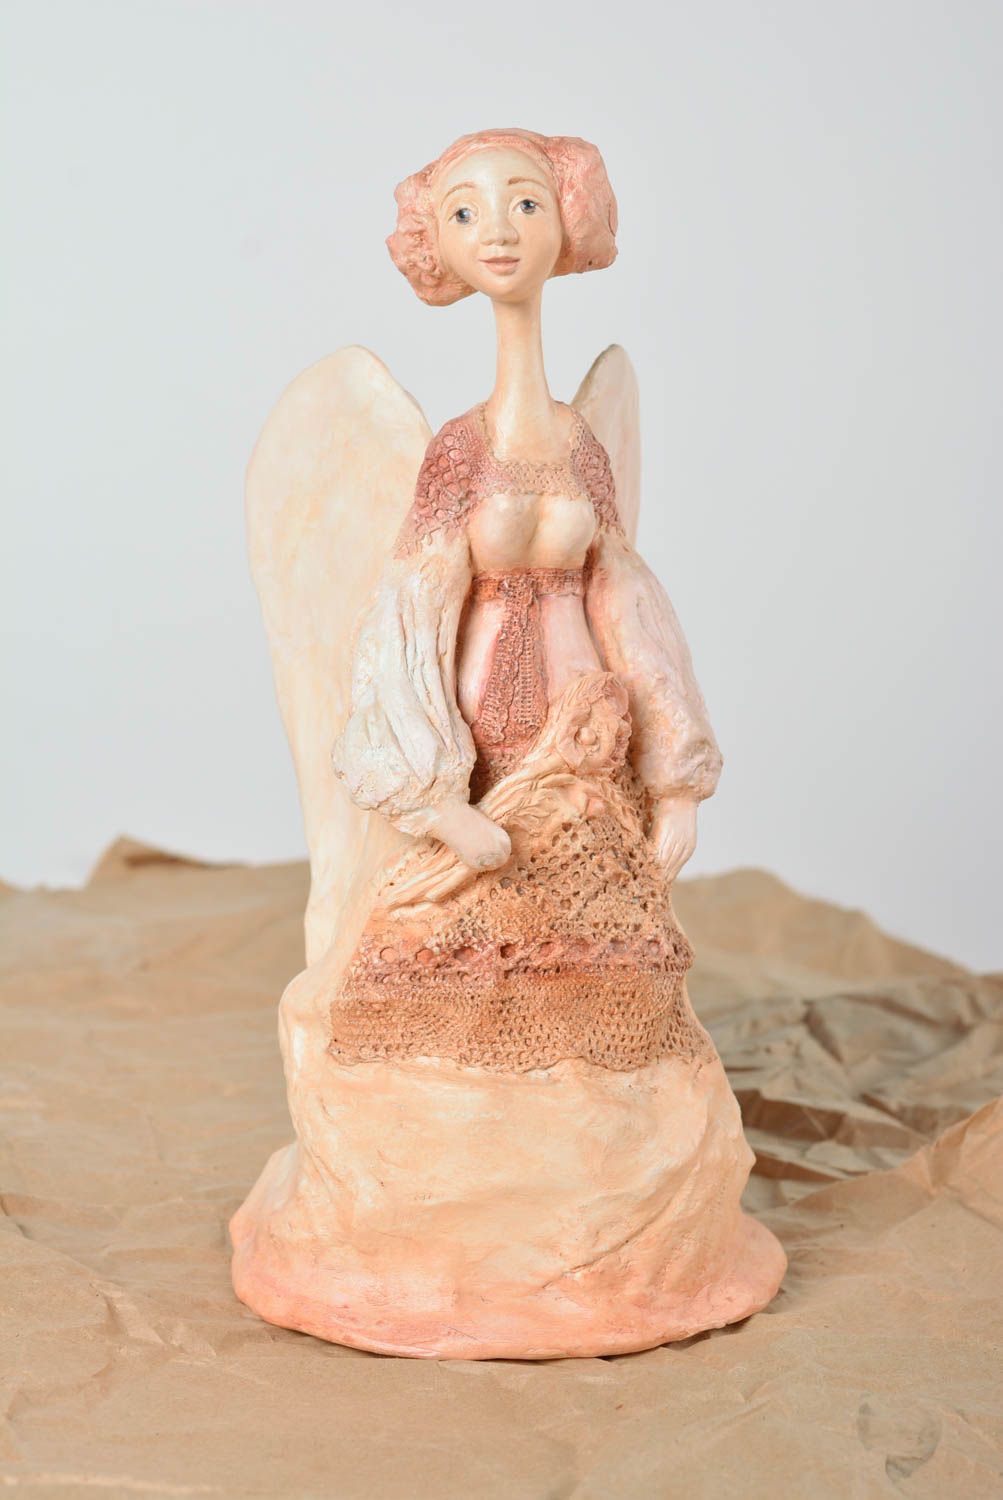 Handmade designer statuette clay figurine home decor ideas decorative use only photo 1